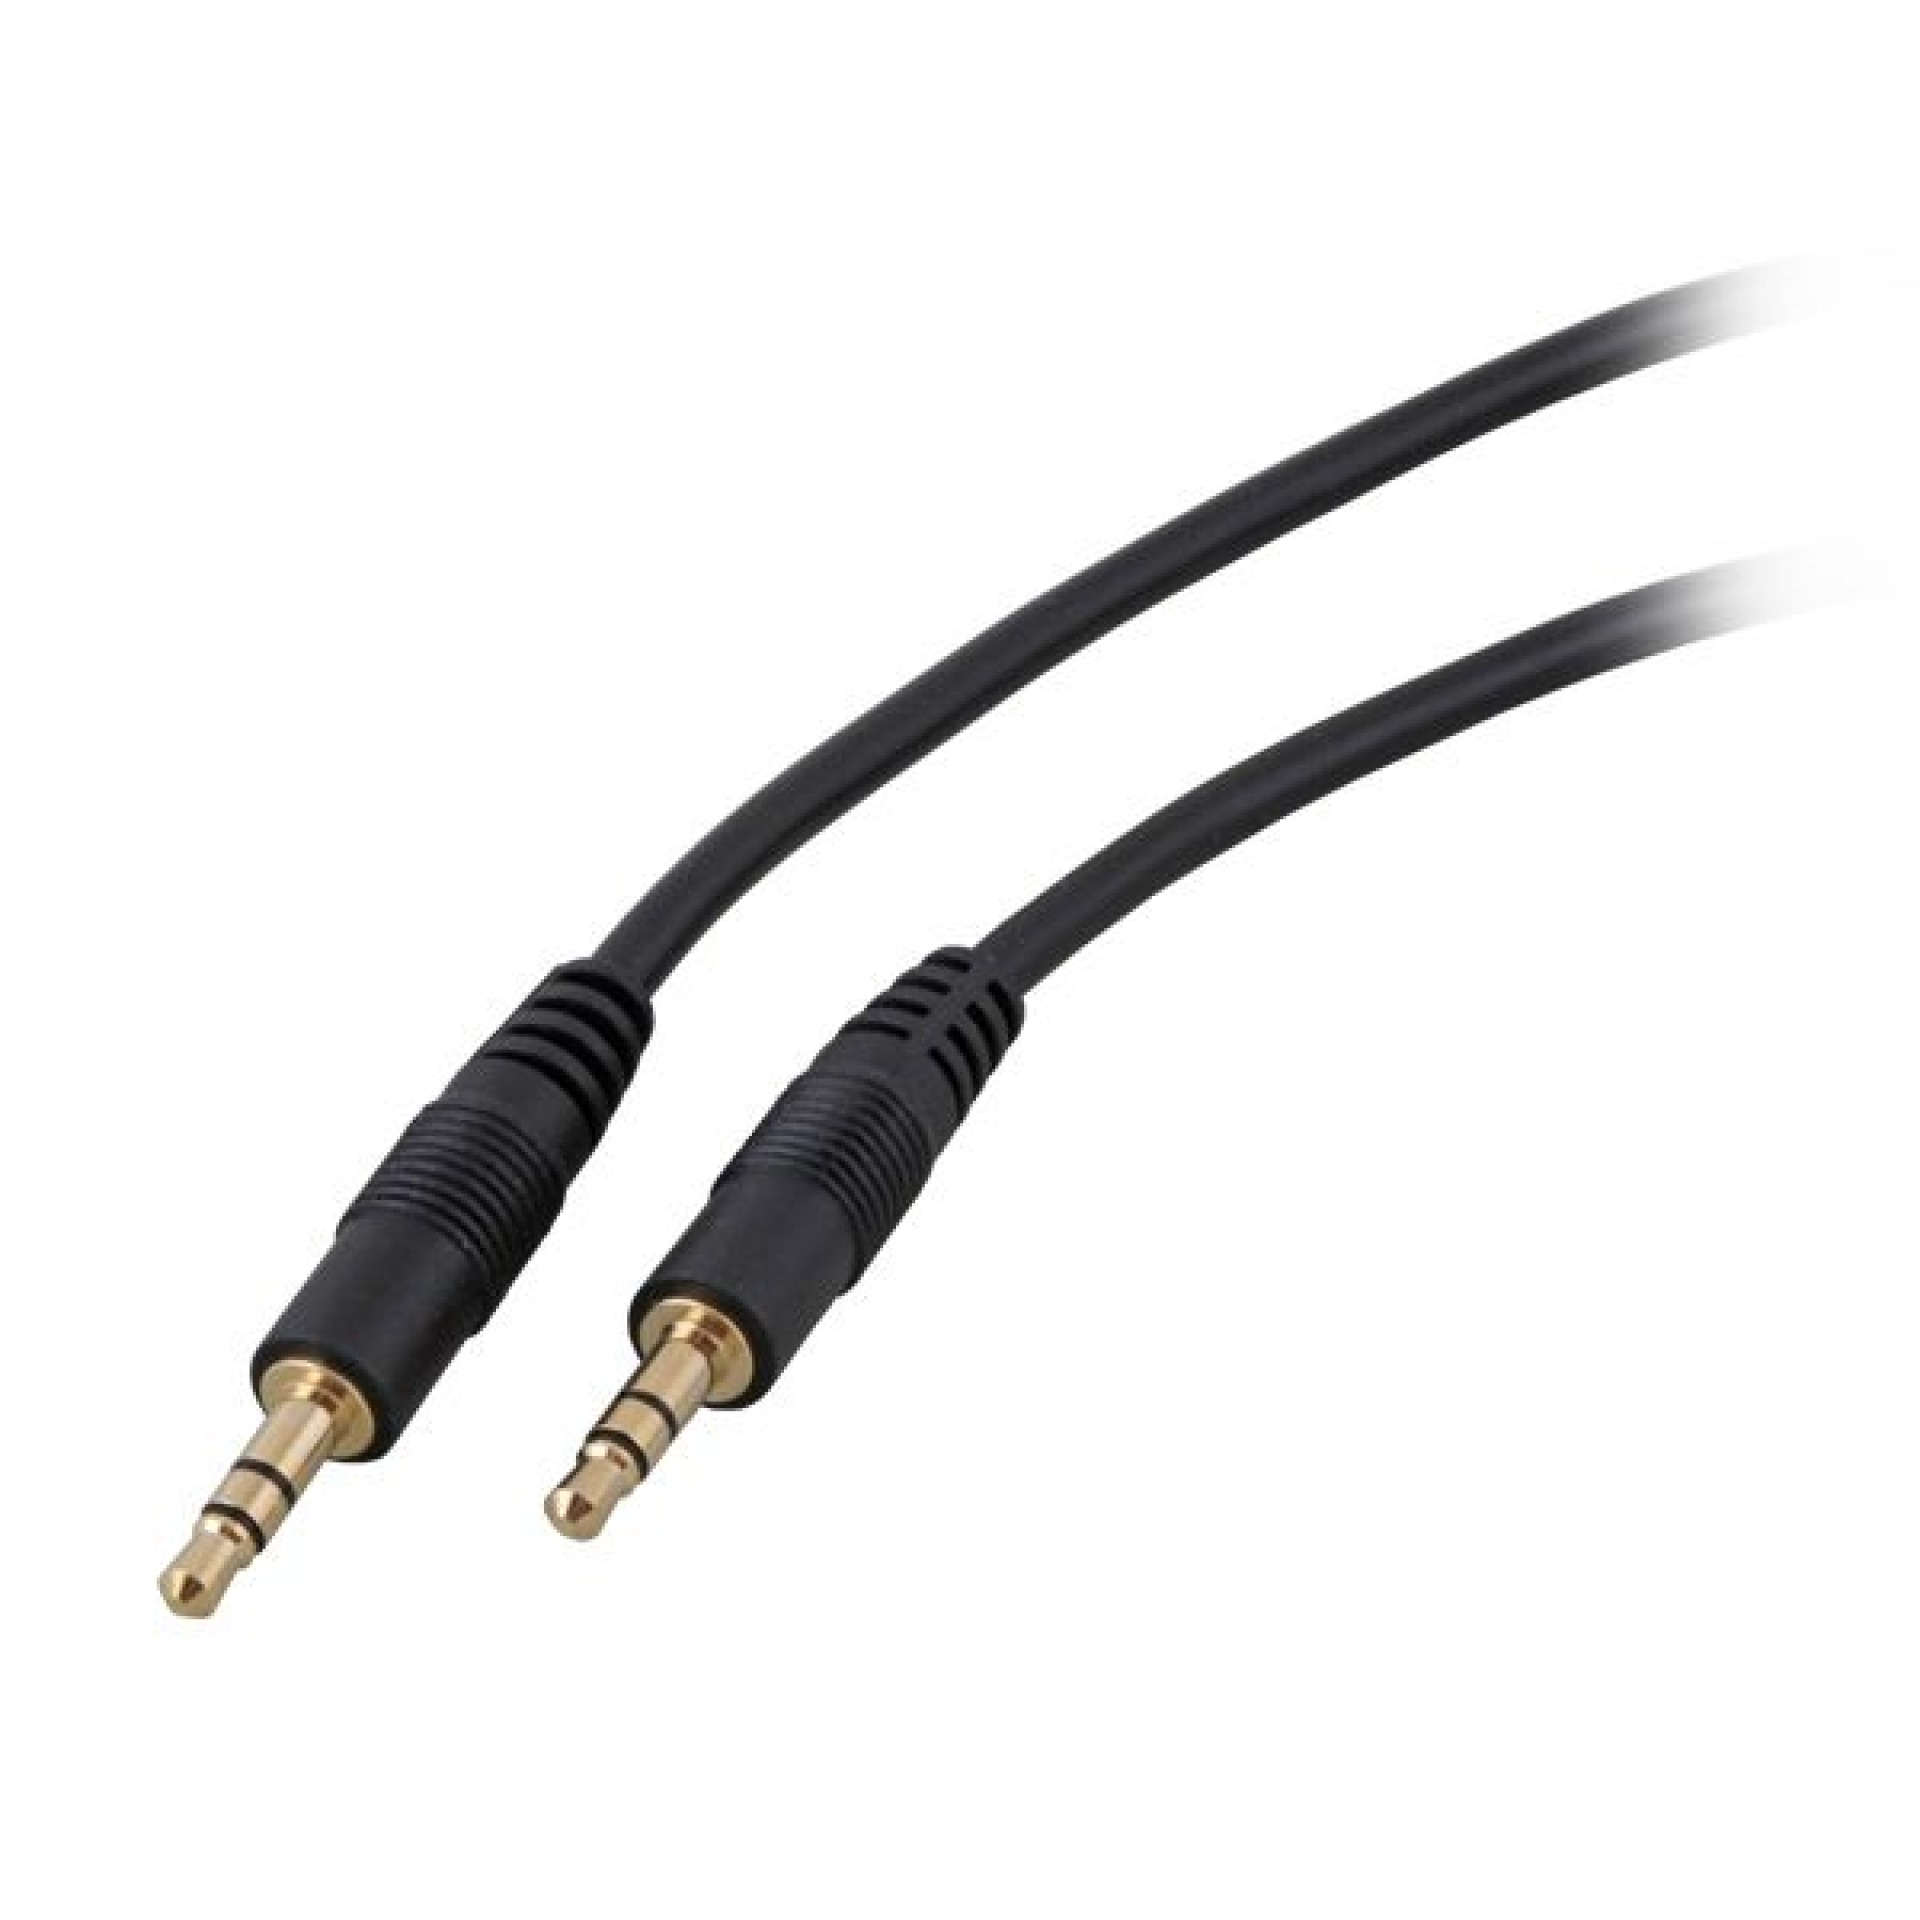 Audio Connection Cabel, Klinke 3.5mm Stereo, 10 meters, black